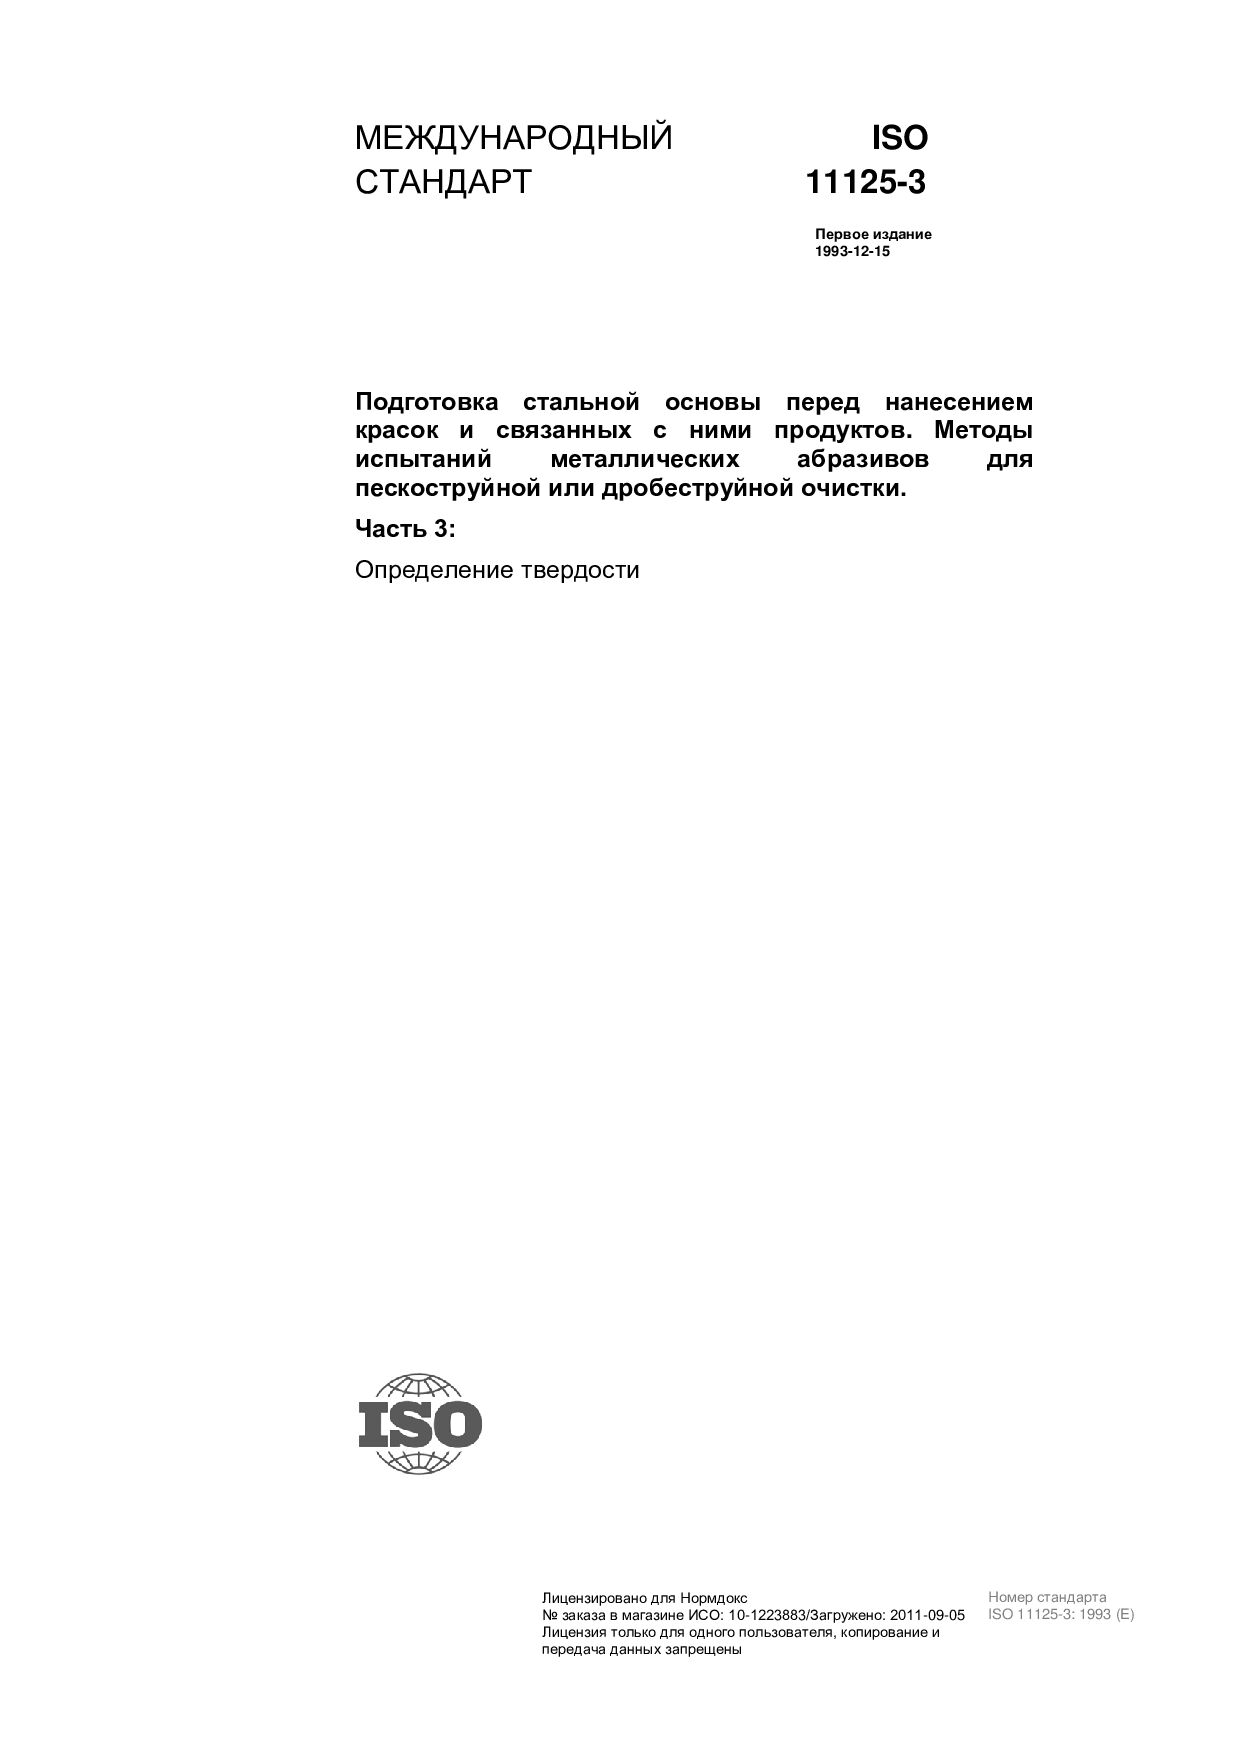 ISO 11125-3:1993封面图